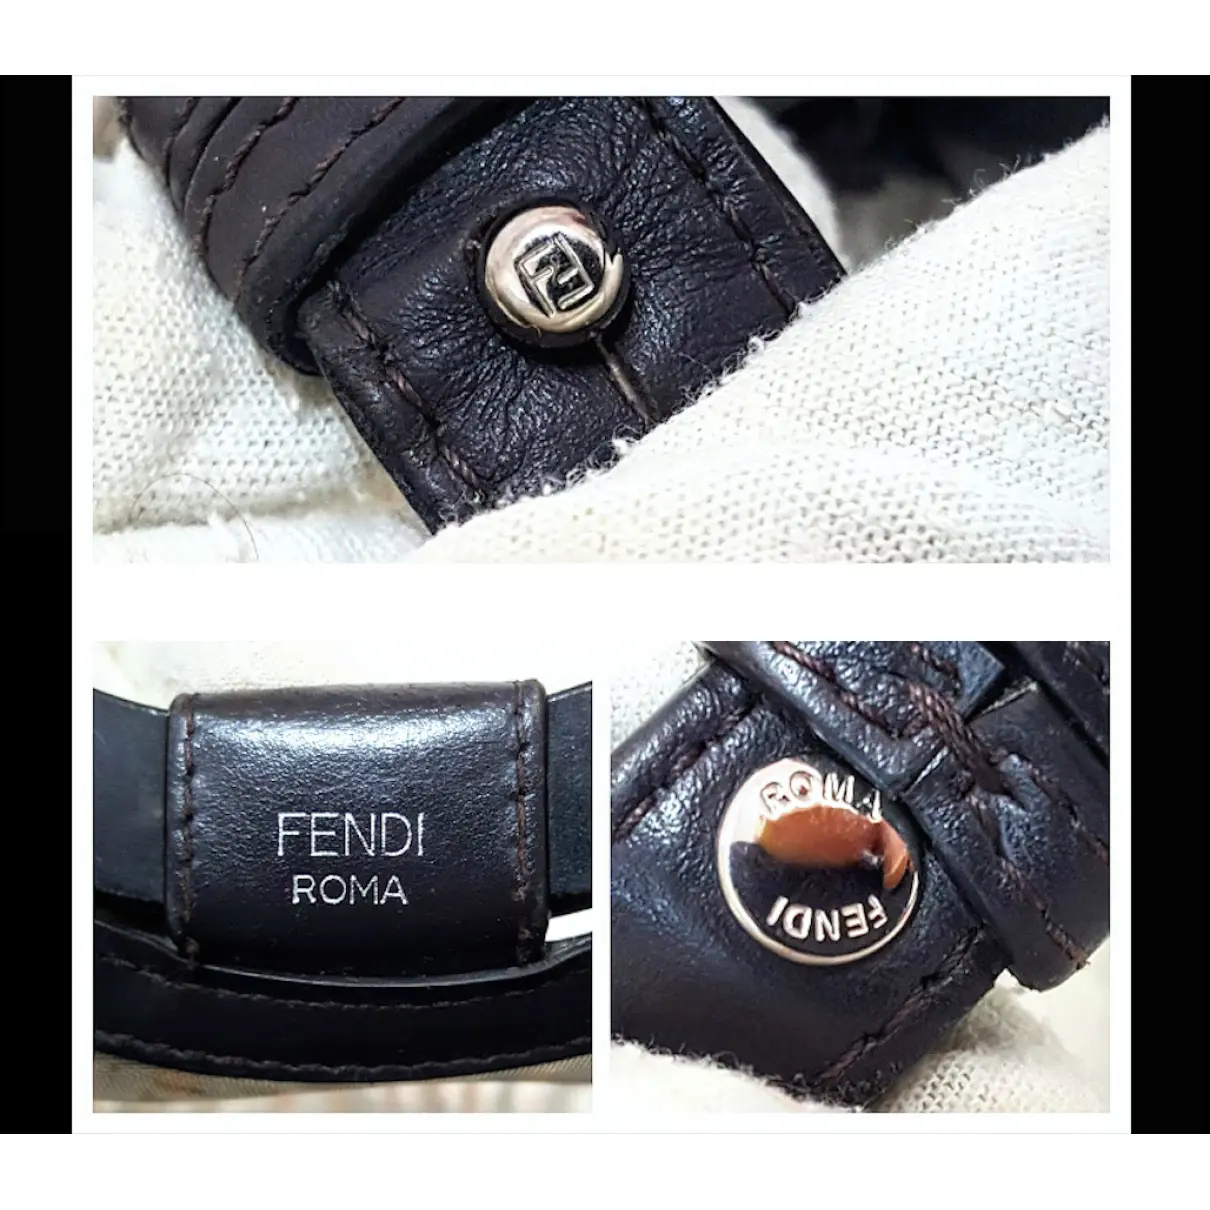 Buy Fendi Runaway handbag online